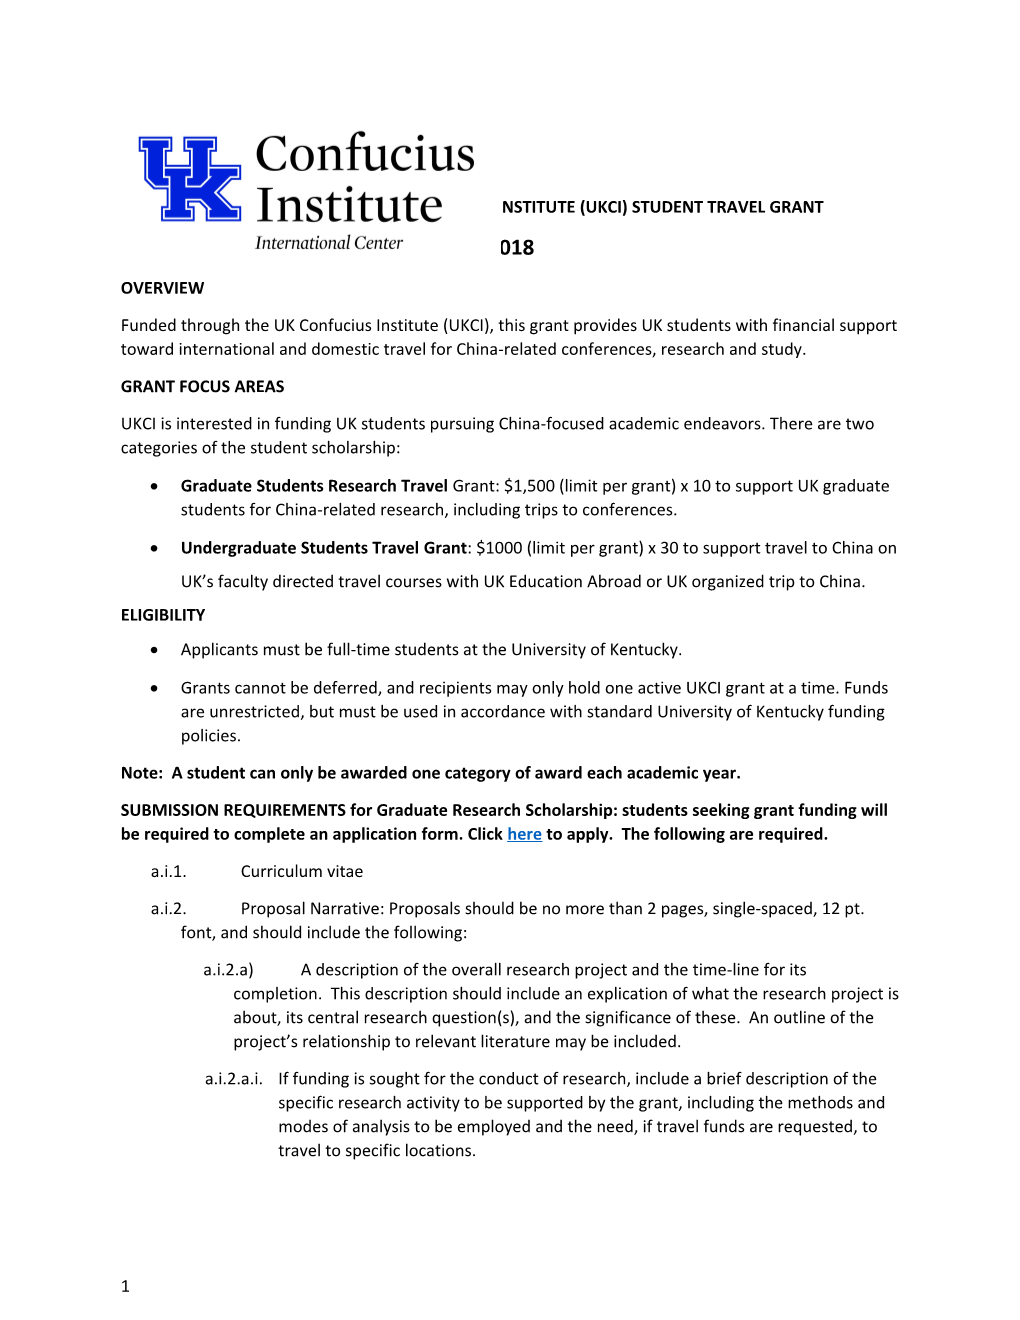 University of Kentucky Confucius Institute (Ukci) Student Travel Grant